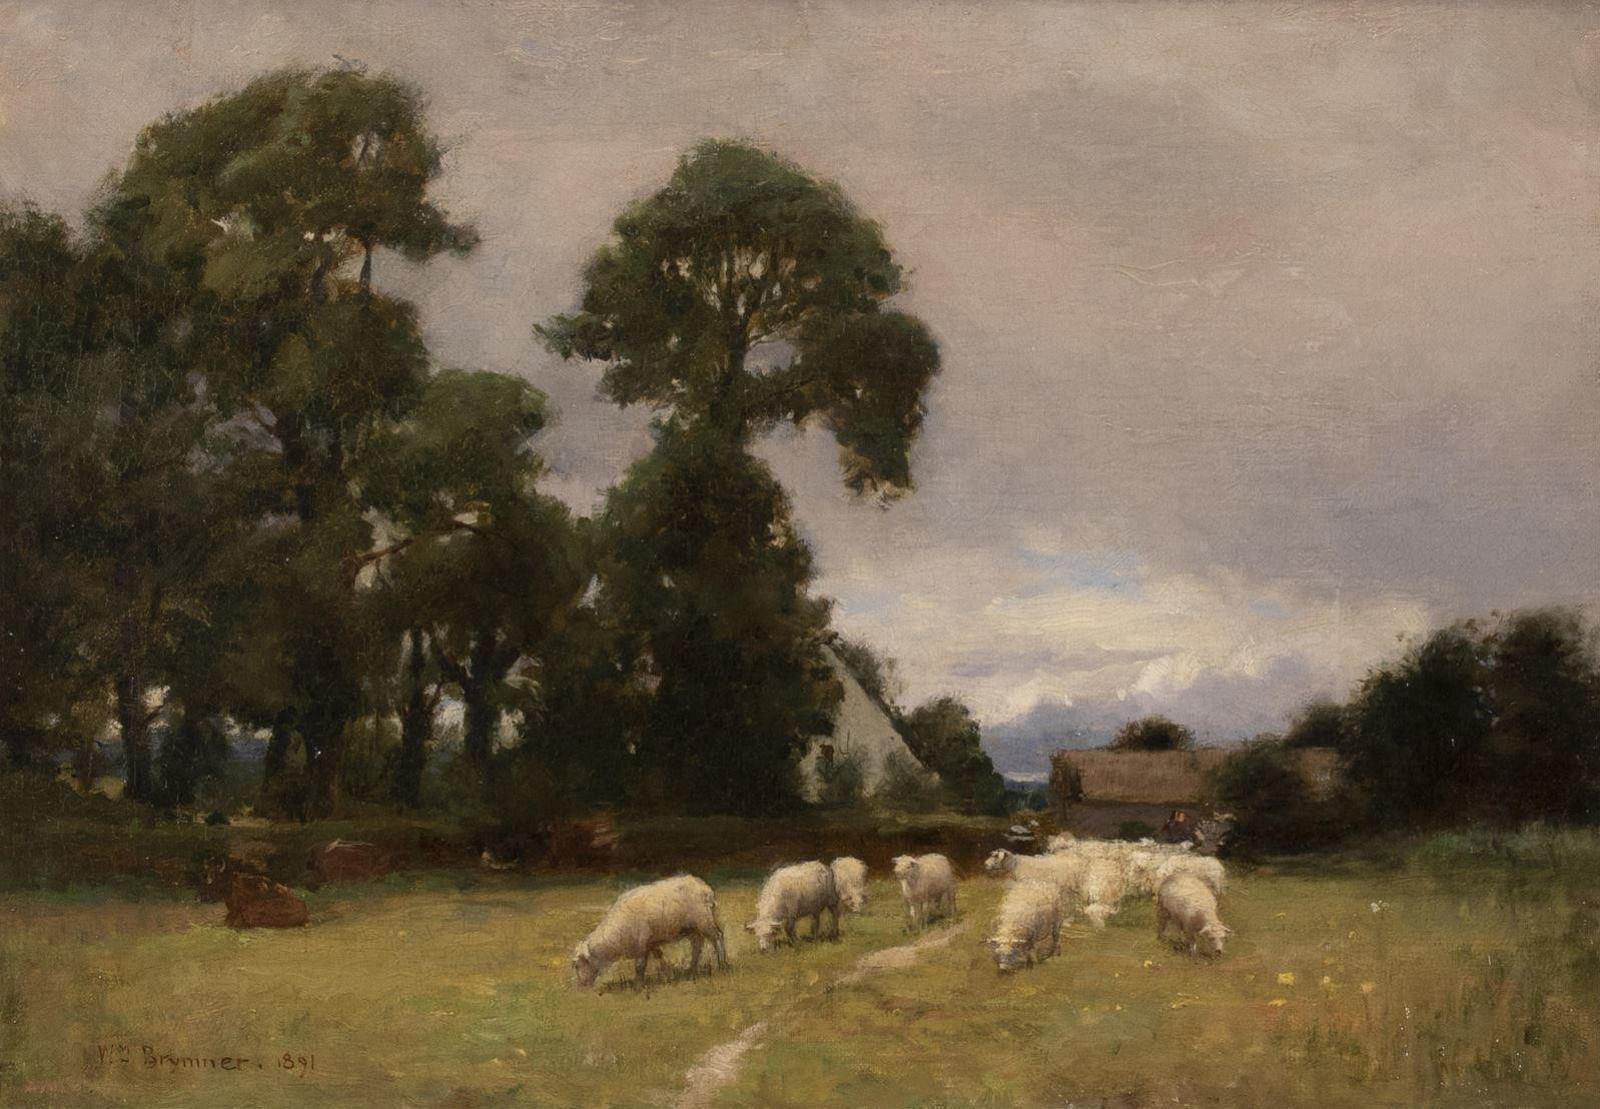 William Brymner (1855-1925) - Summer Landscape And Grazing Sheep; 1891